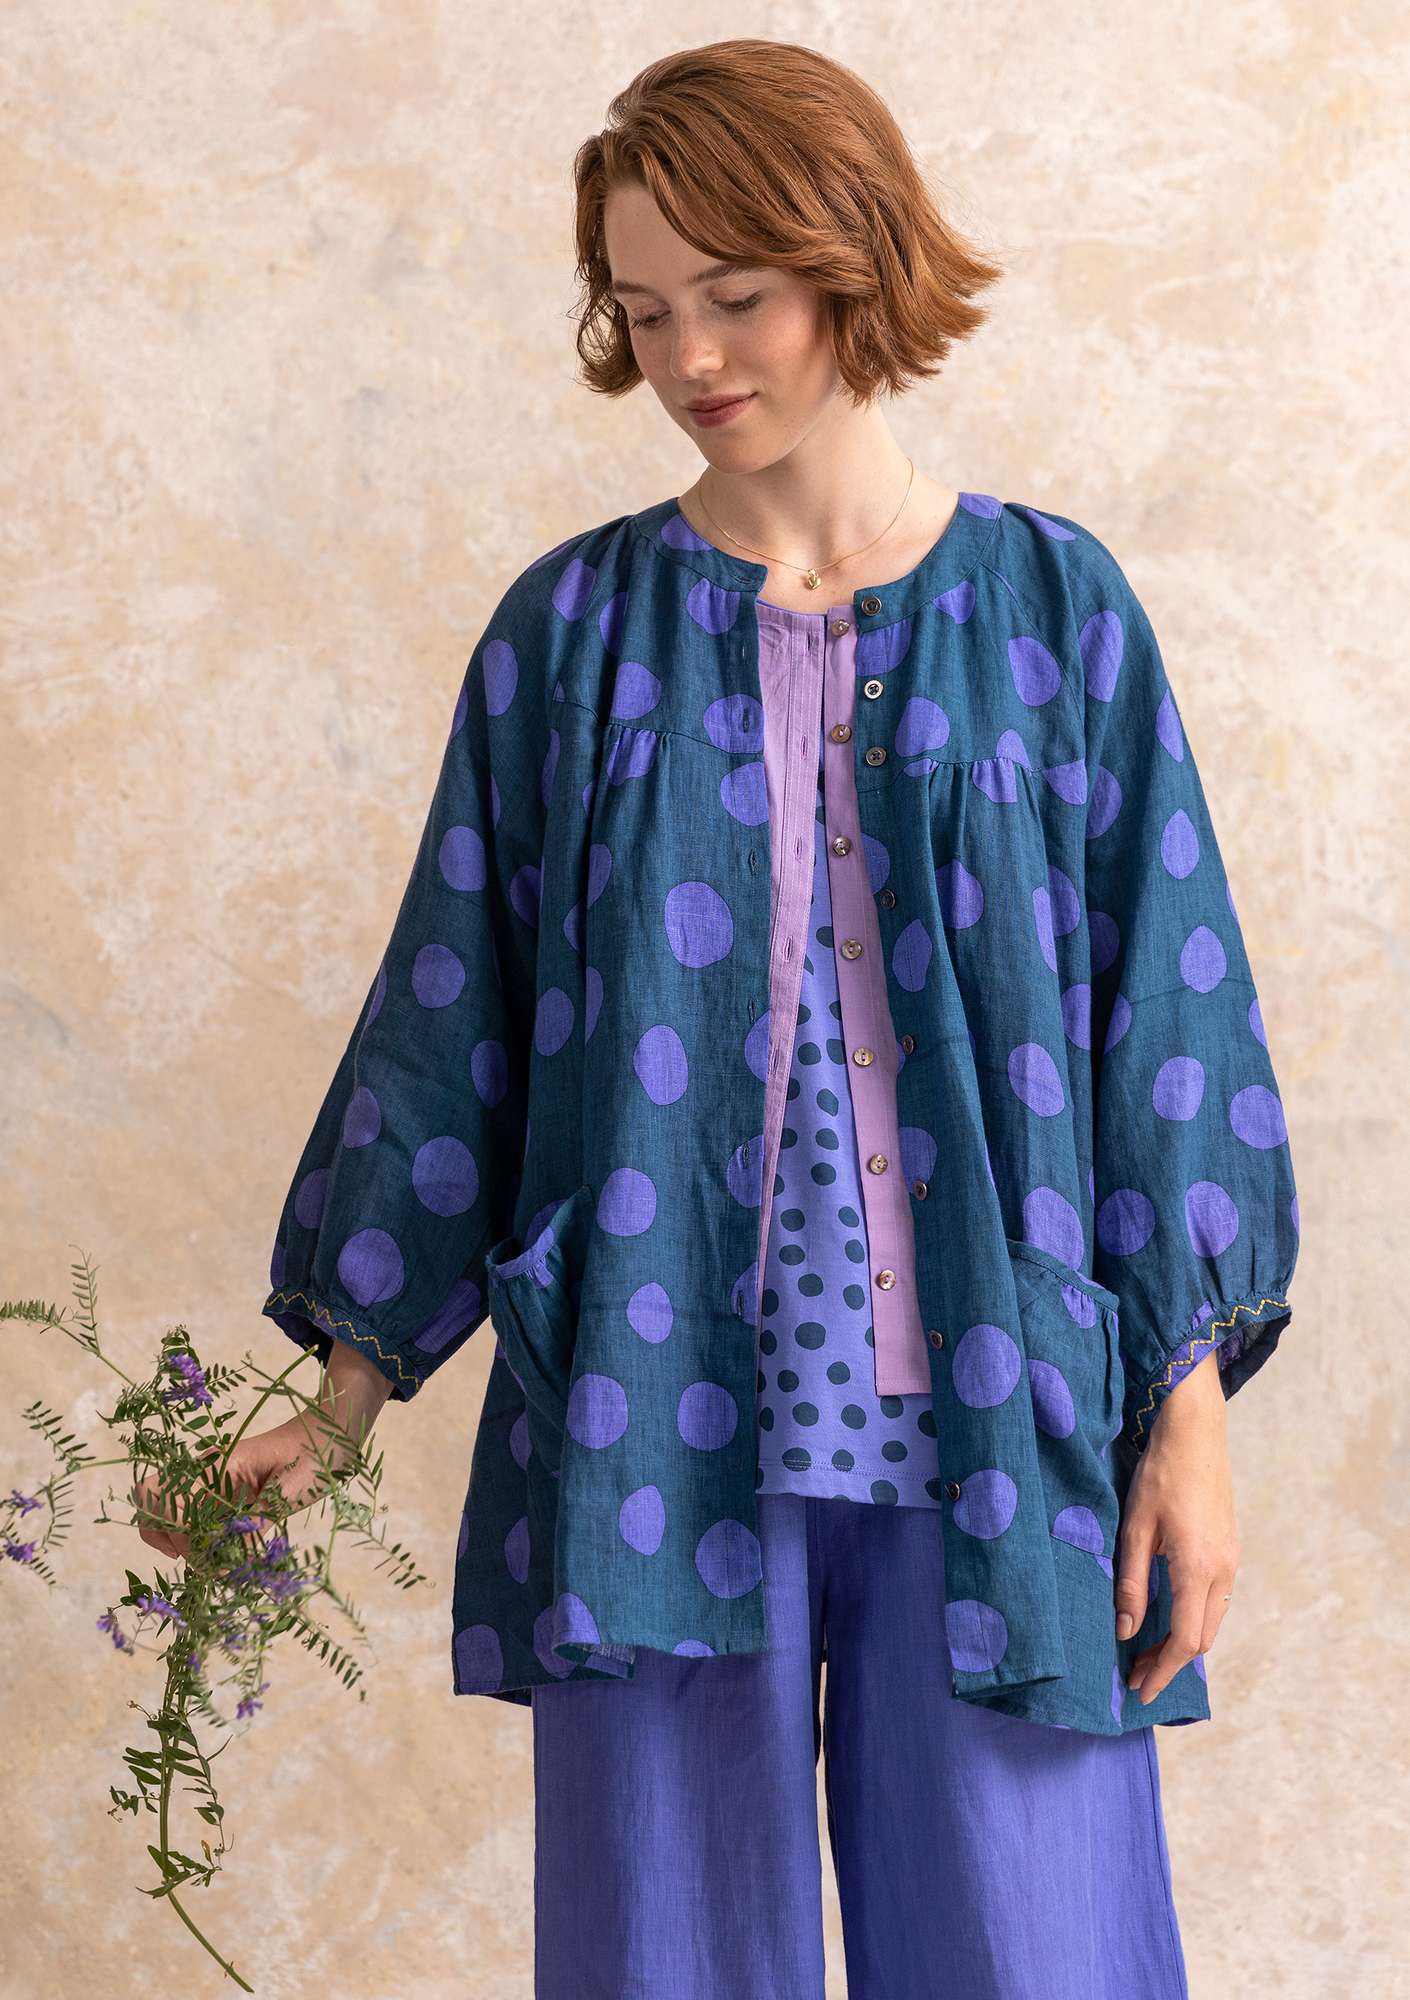 Amber artist’s blouse indigo/patterned